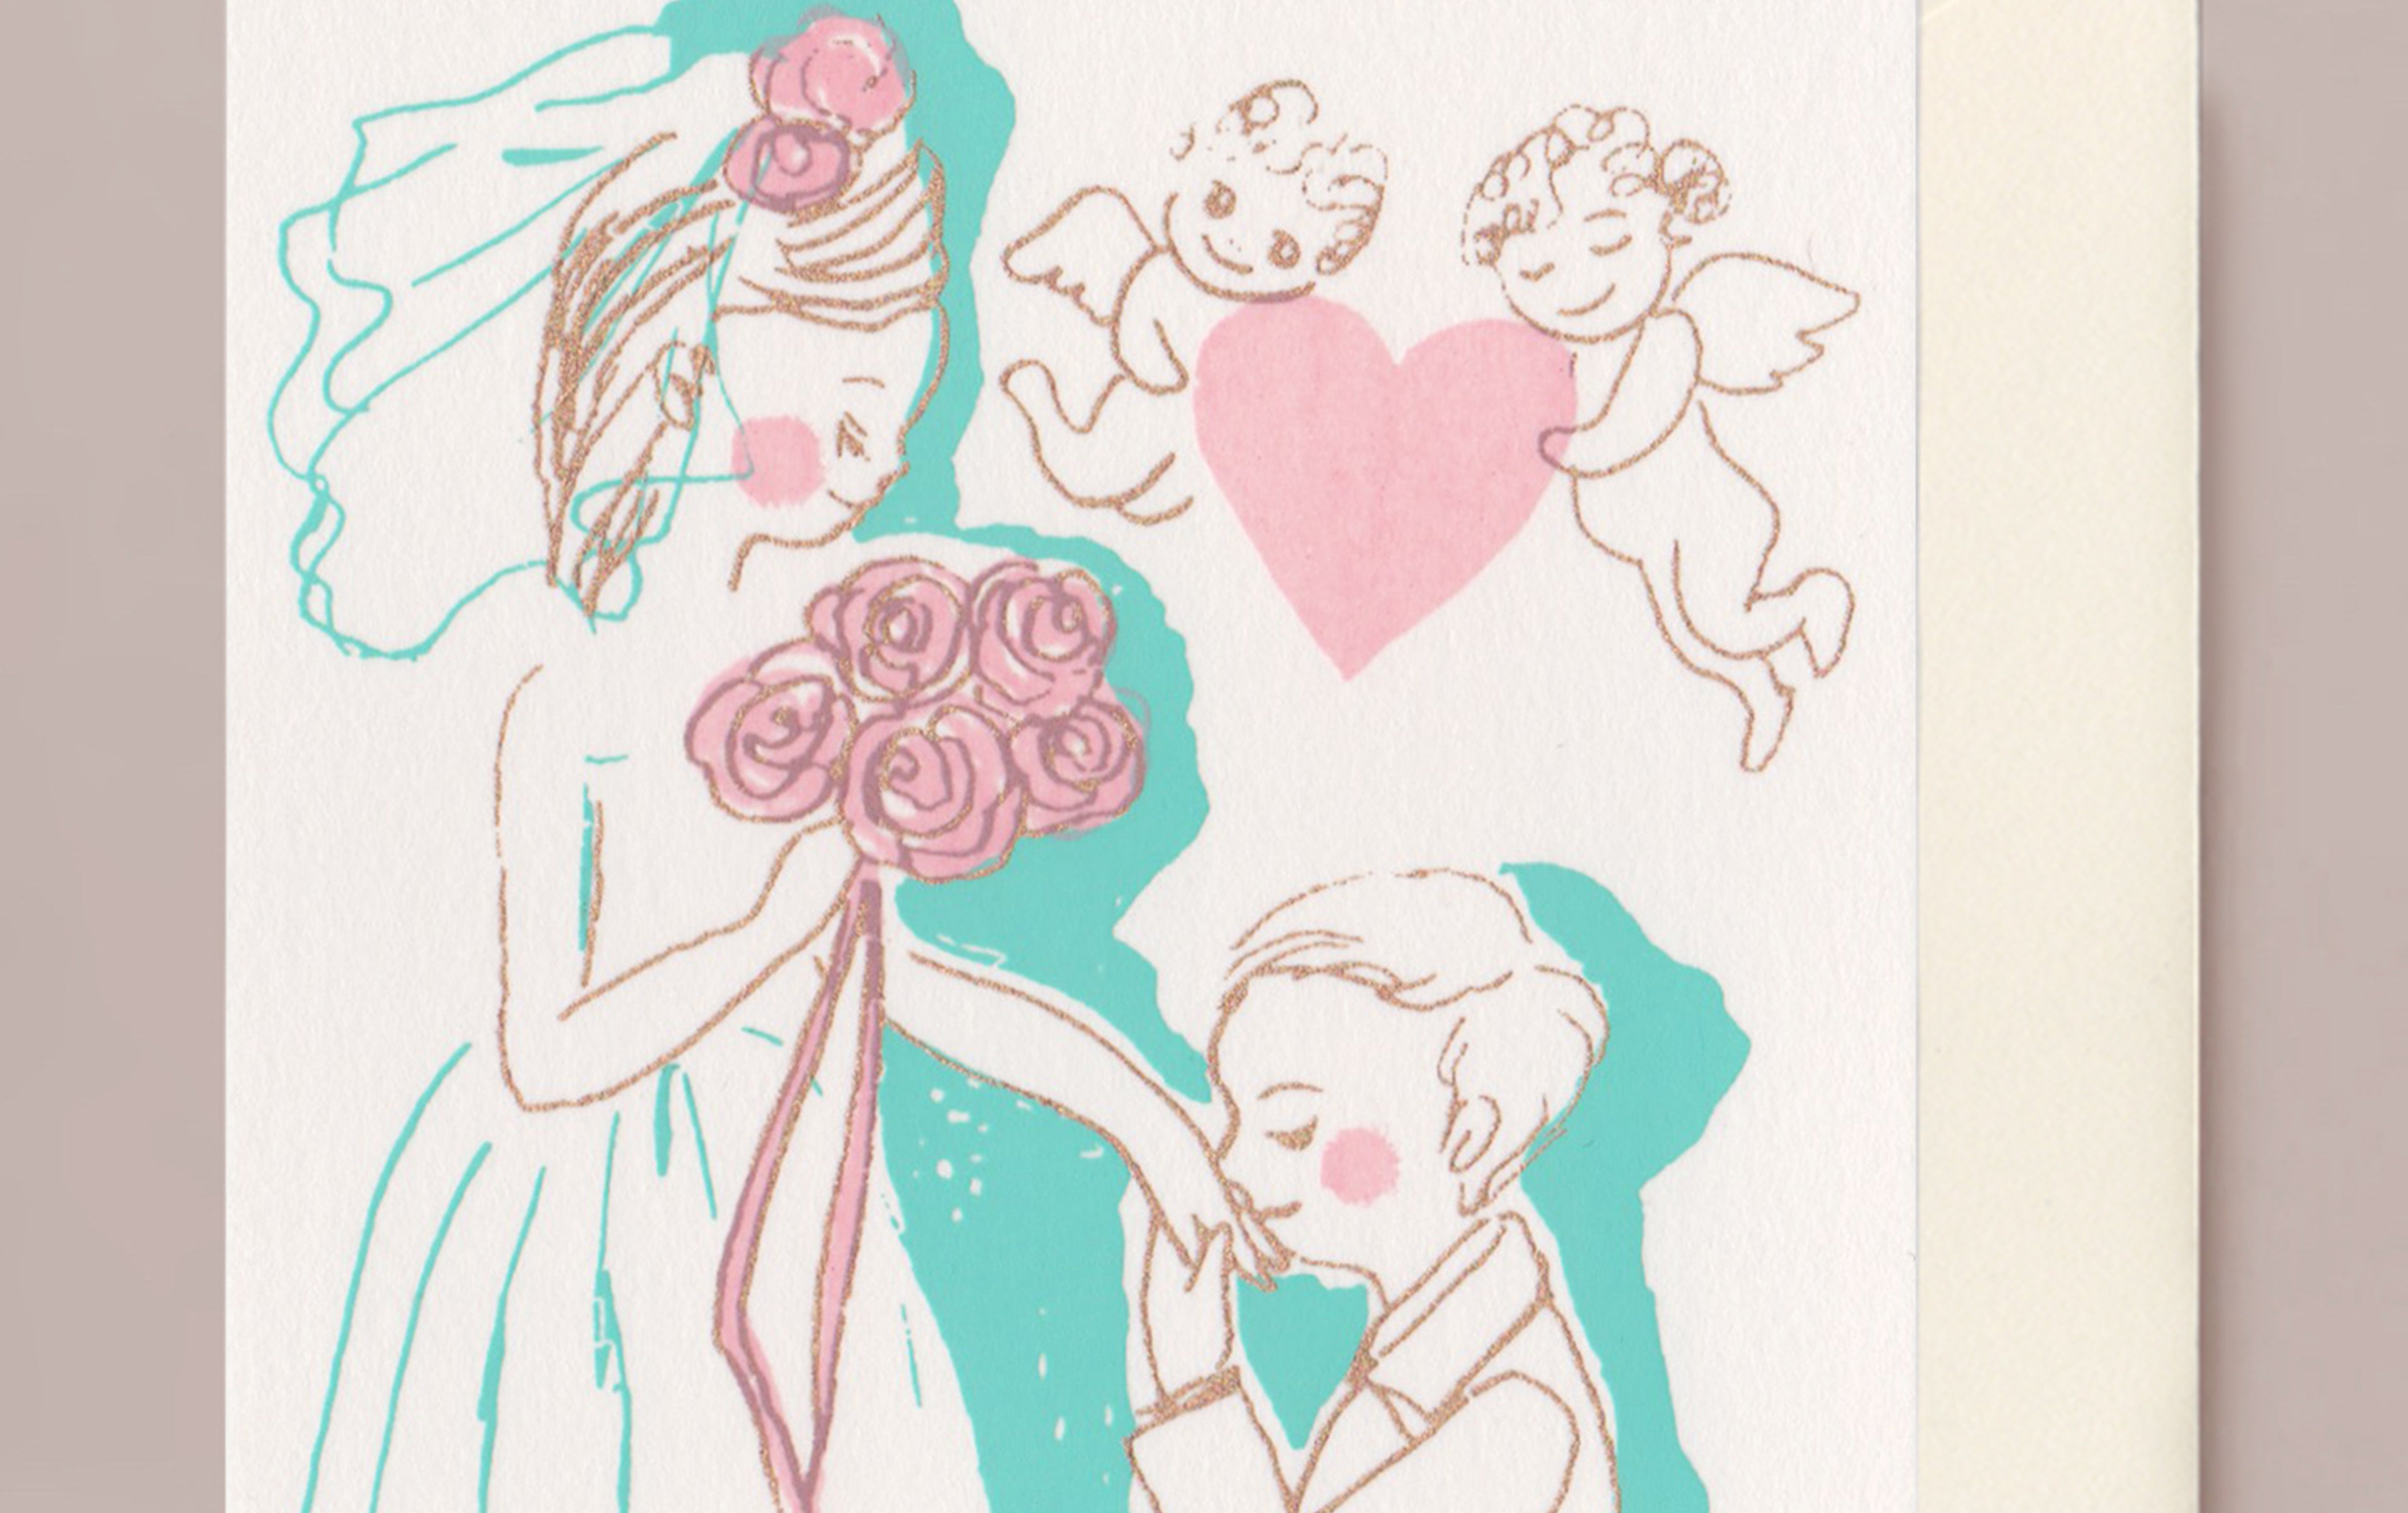 Silk Screen Printed Greeting Card, Marriage